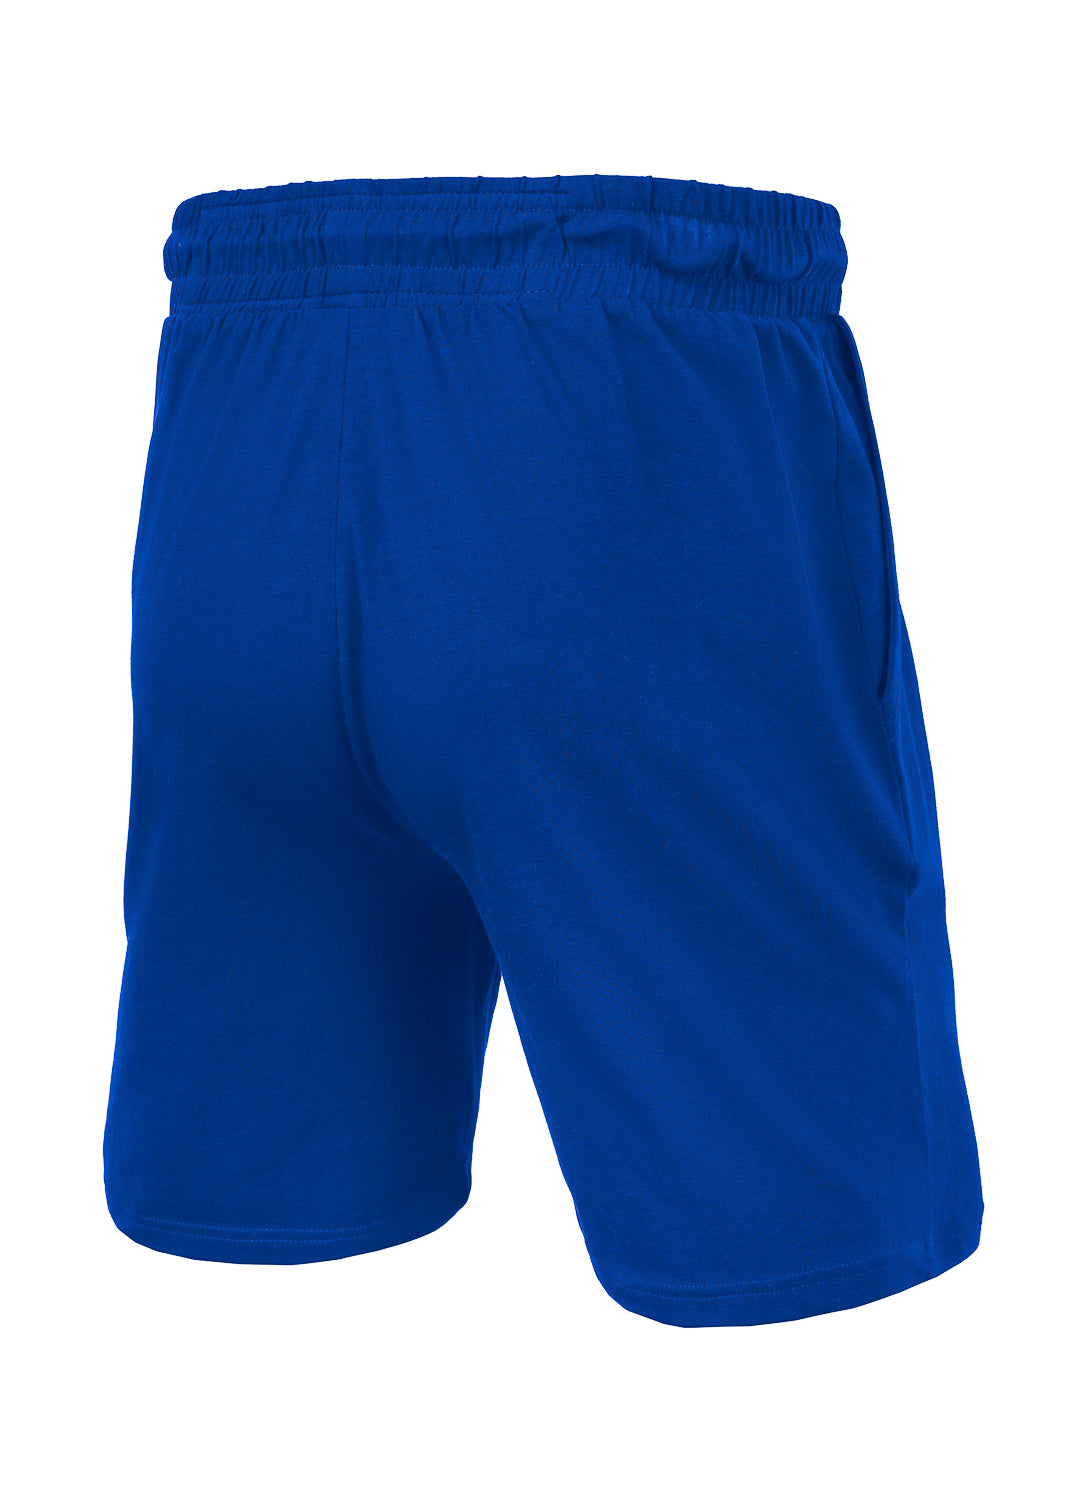 DURANGO Spandex Royal Blue Shorts.